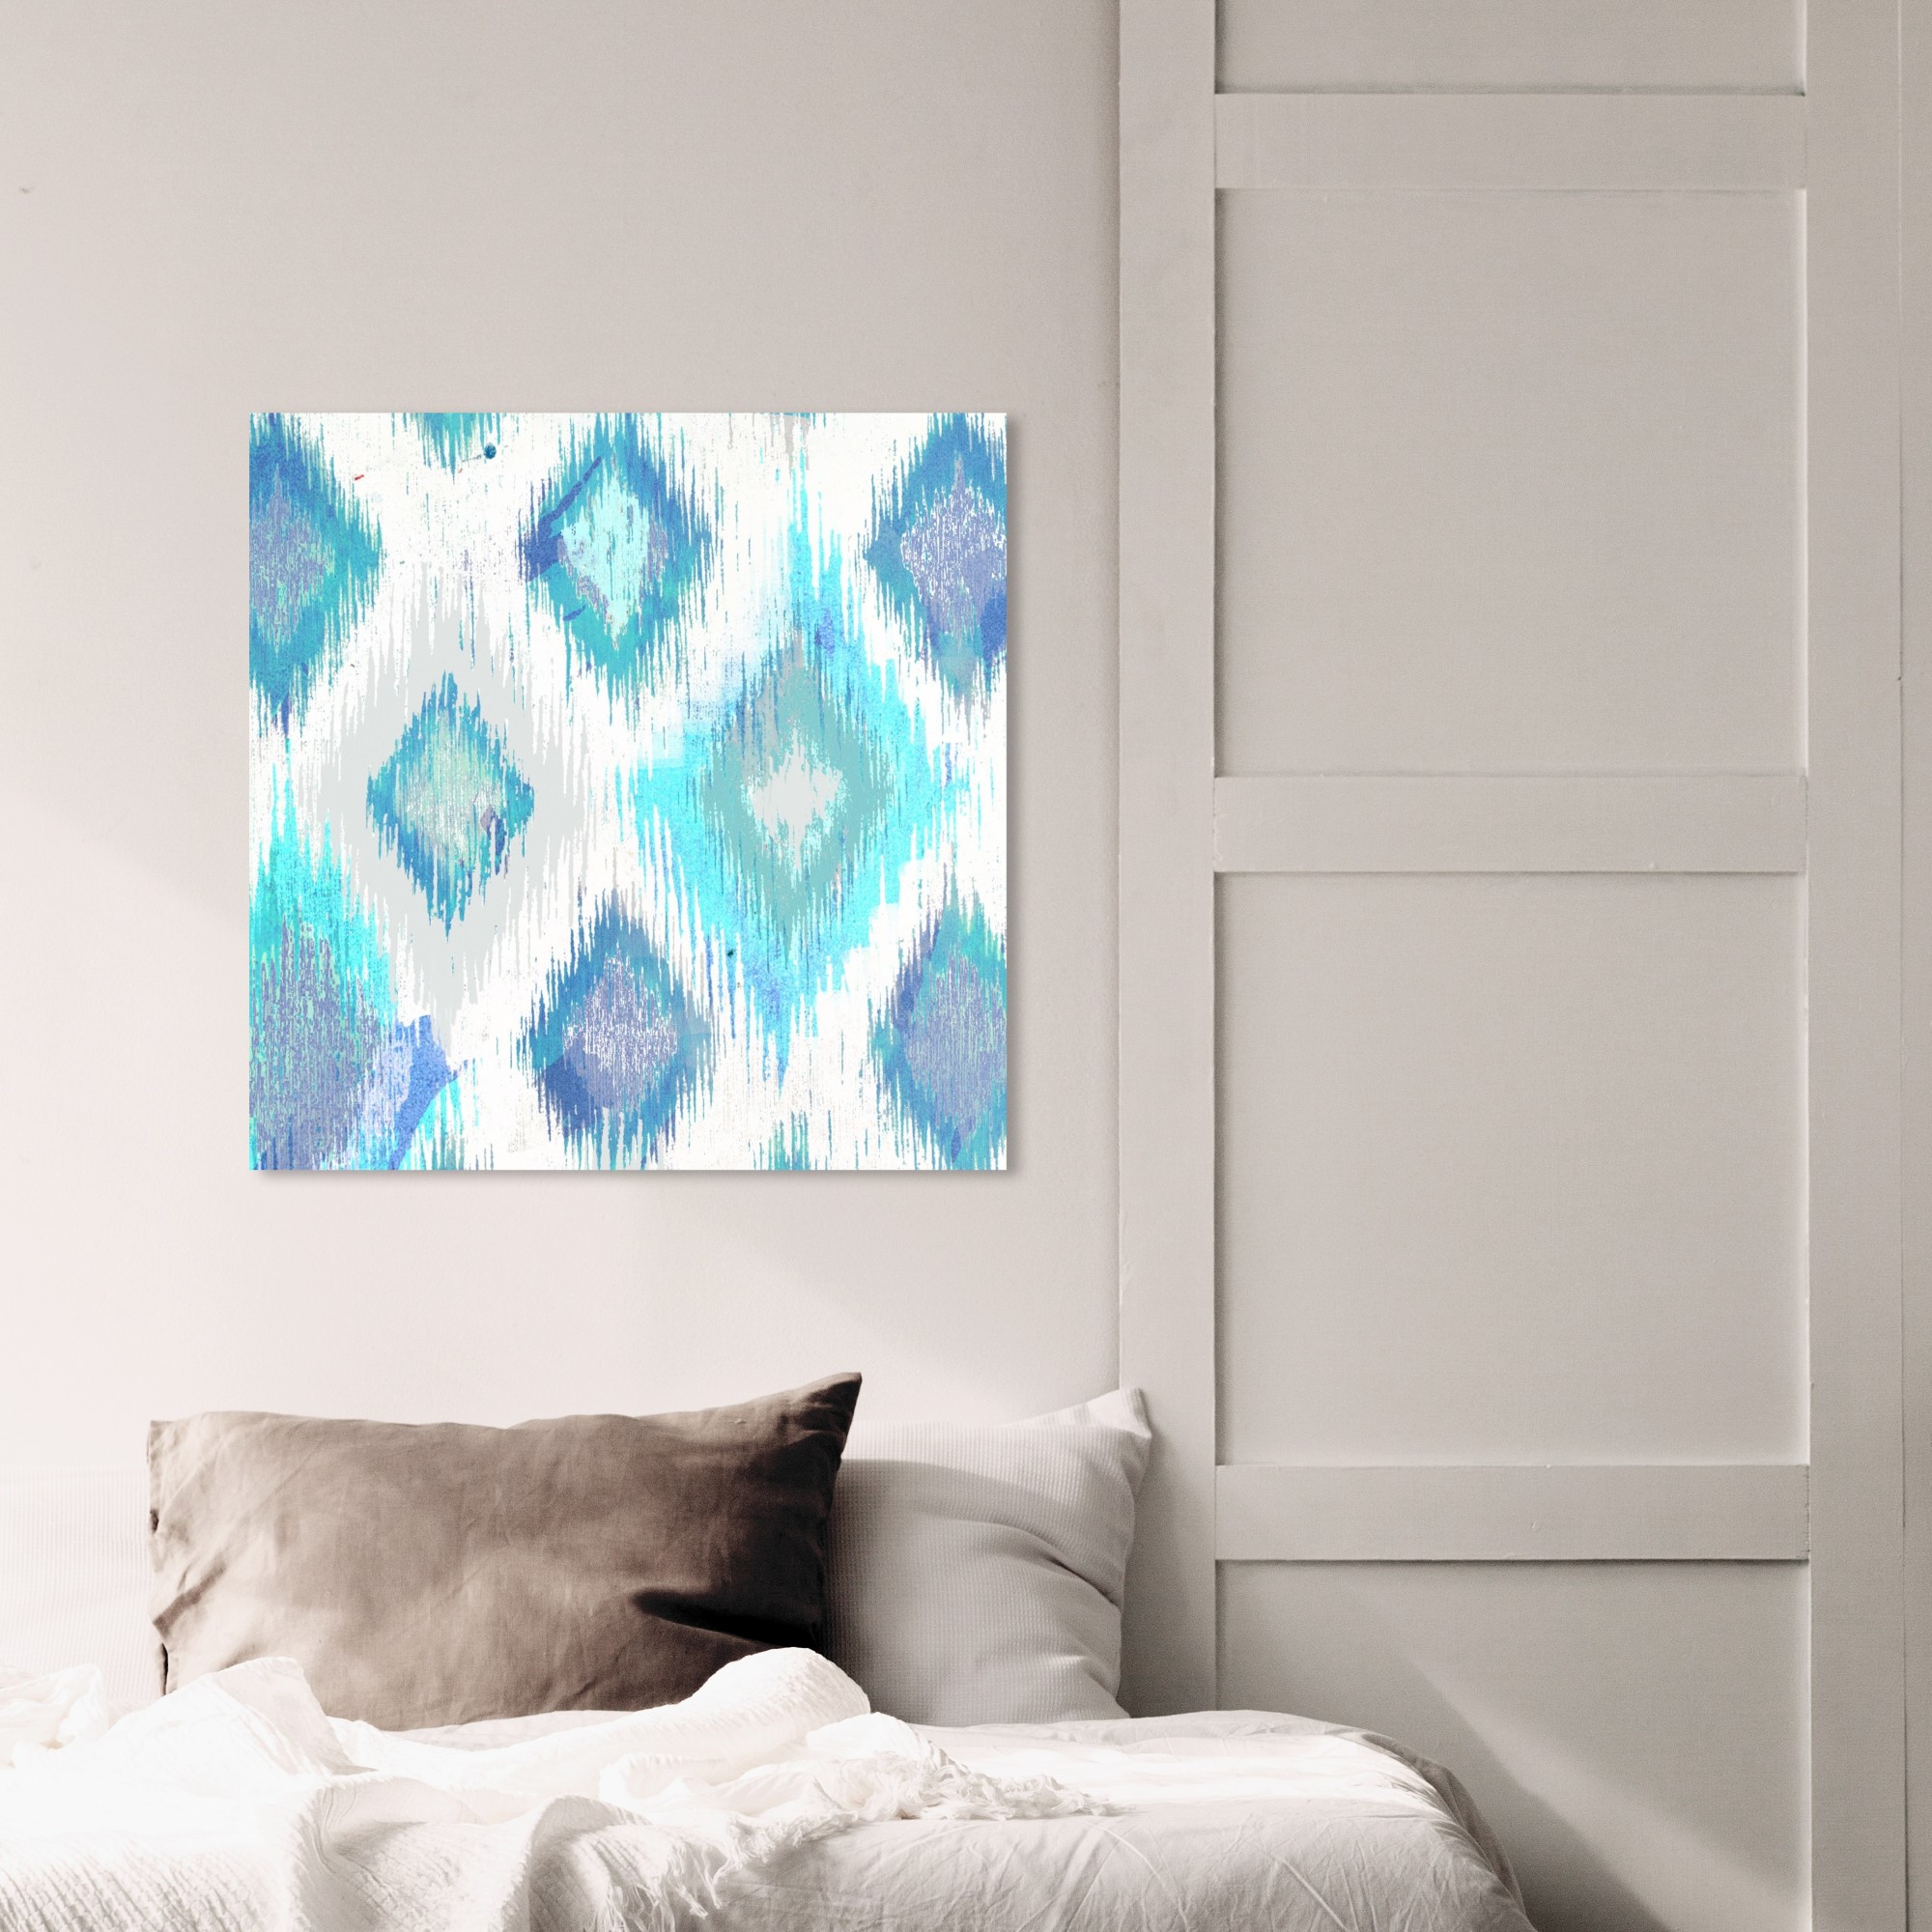 Wynwood Studio Abstract Wall Art Canvas Prints 'Del Mar' Geometric - Blue, White - image 3 of 5